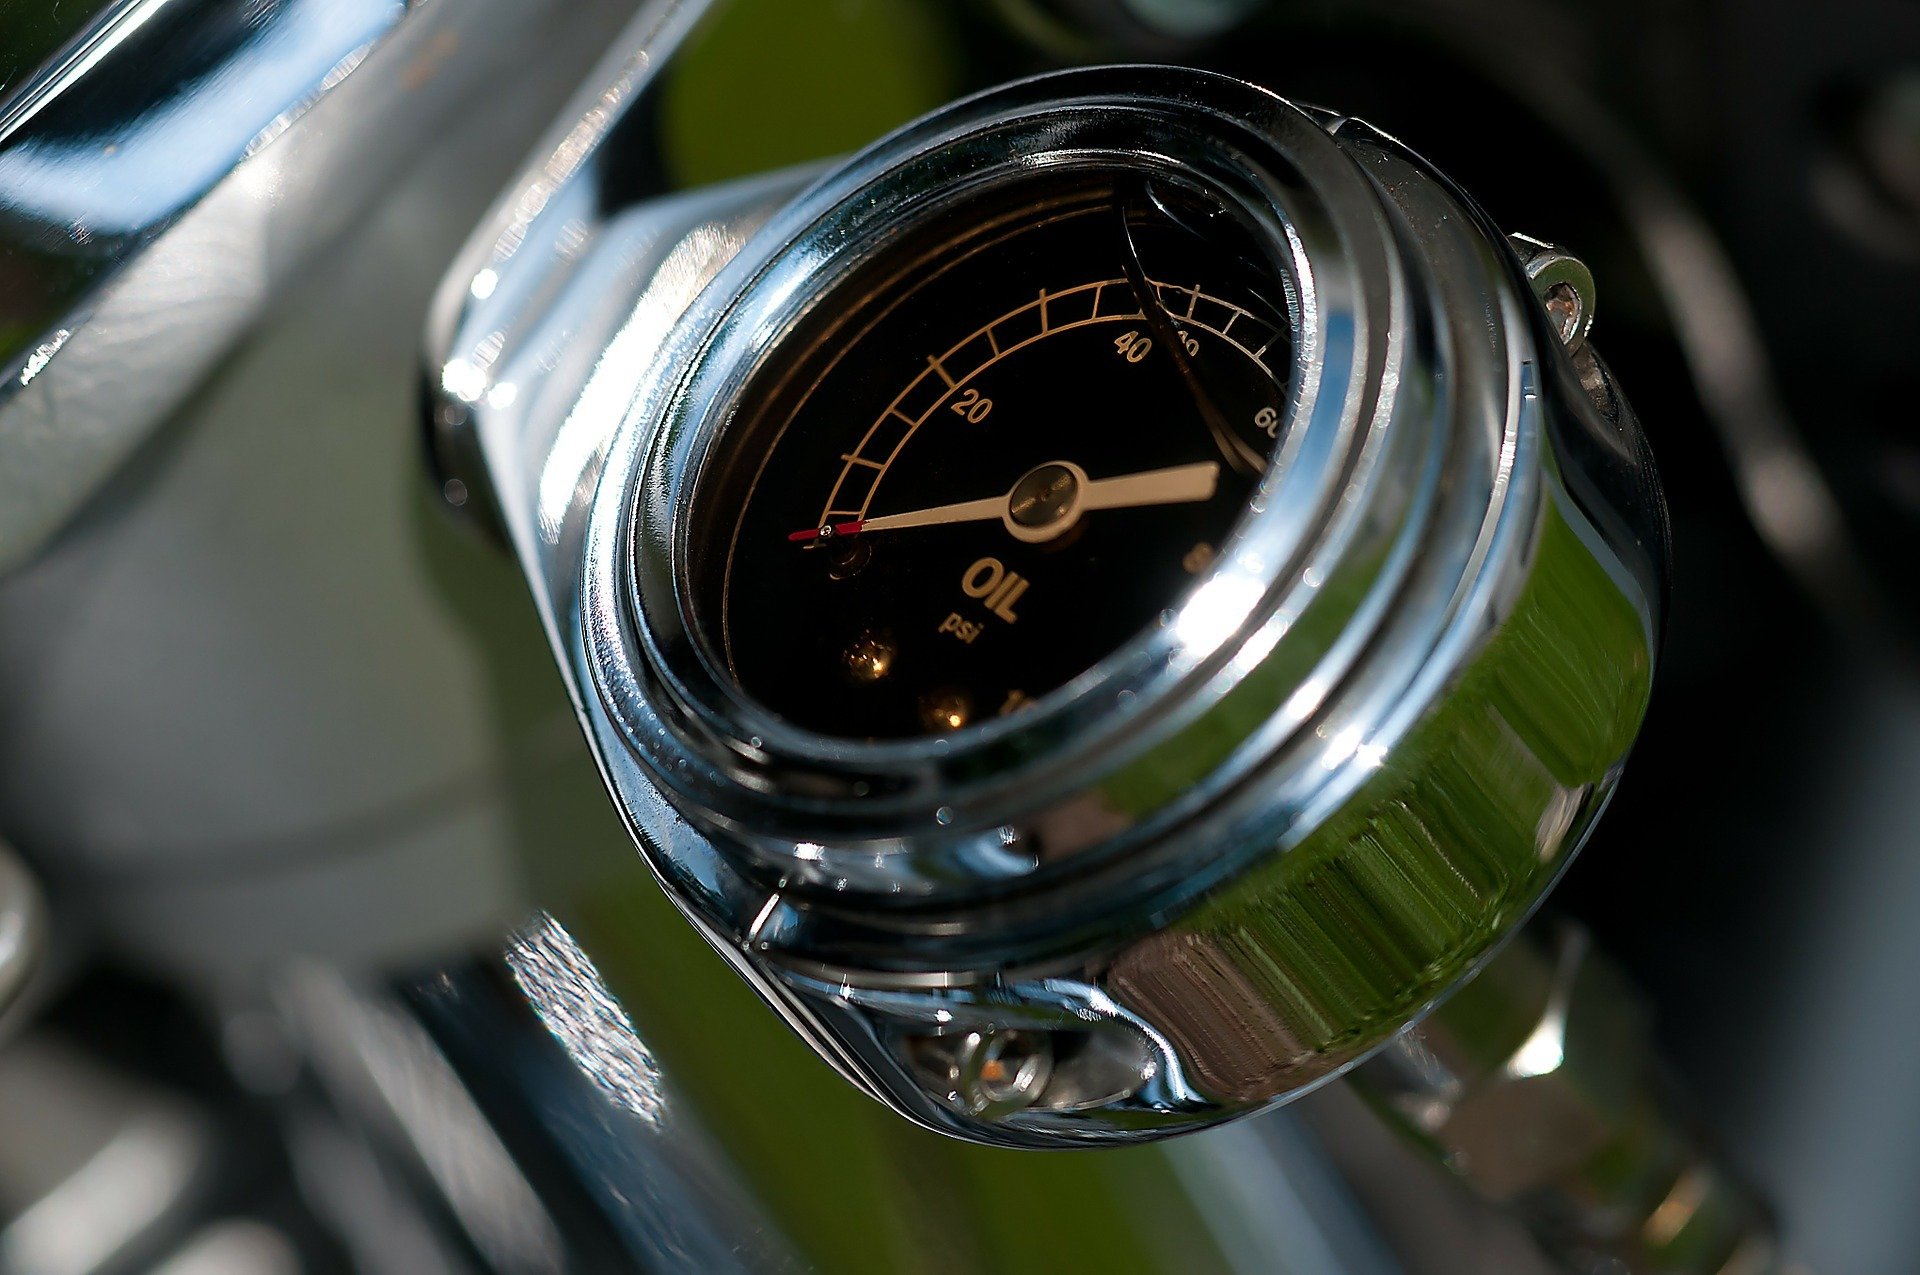 bike oil temperature gauge